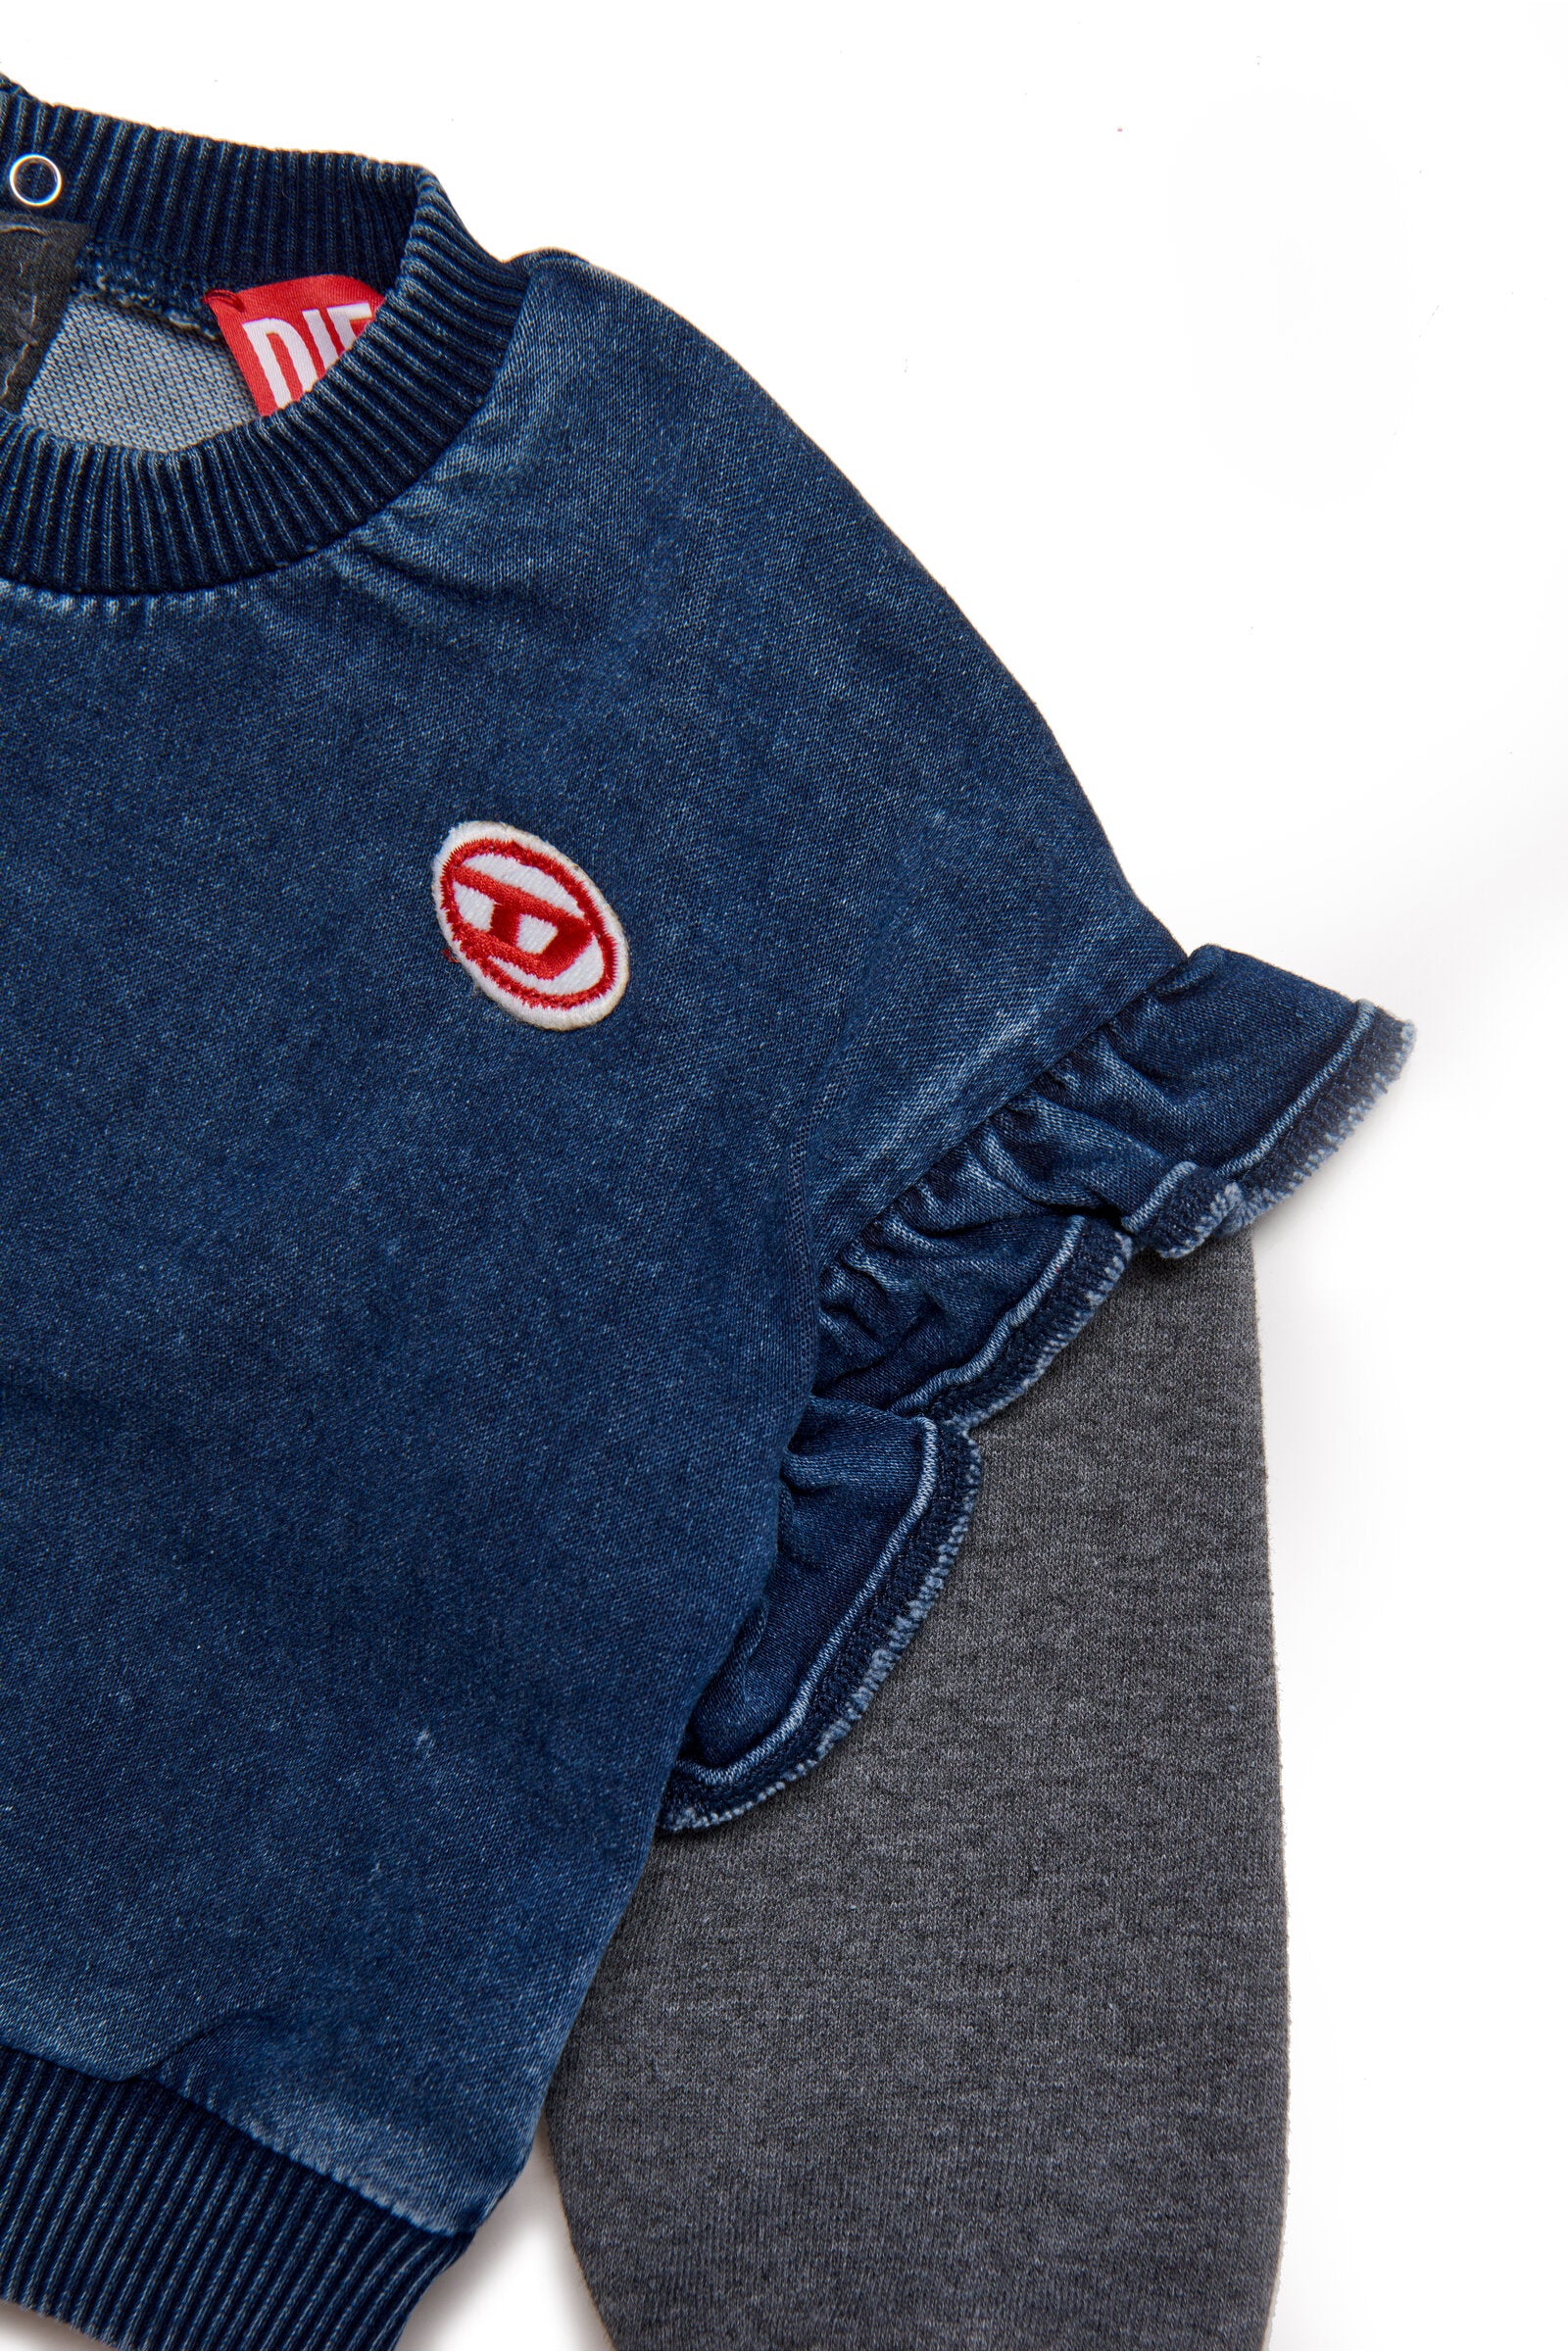 JoggJeans® crewneck sweatshirt with ruffle detail on shoulders